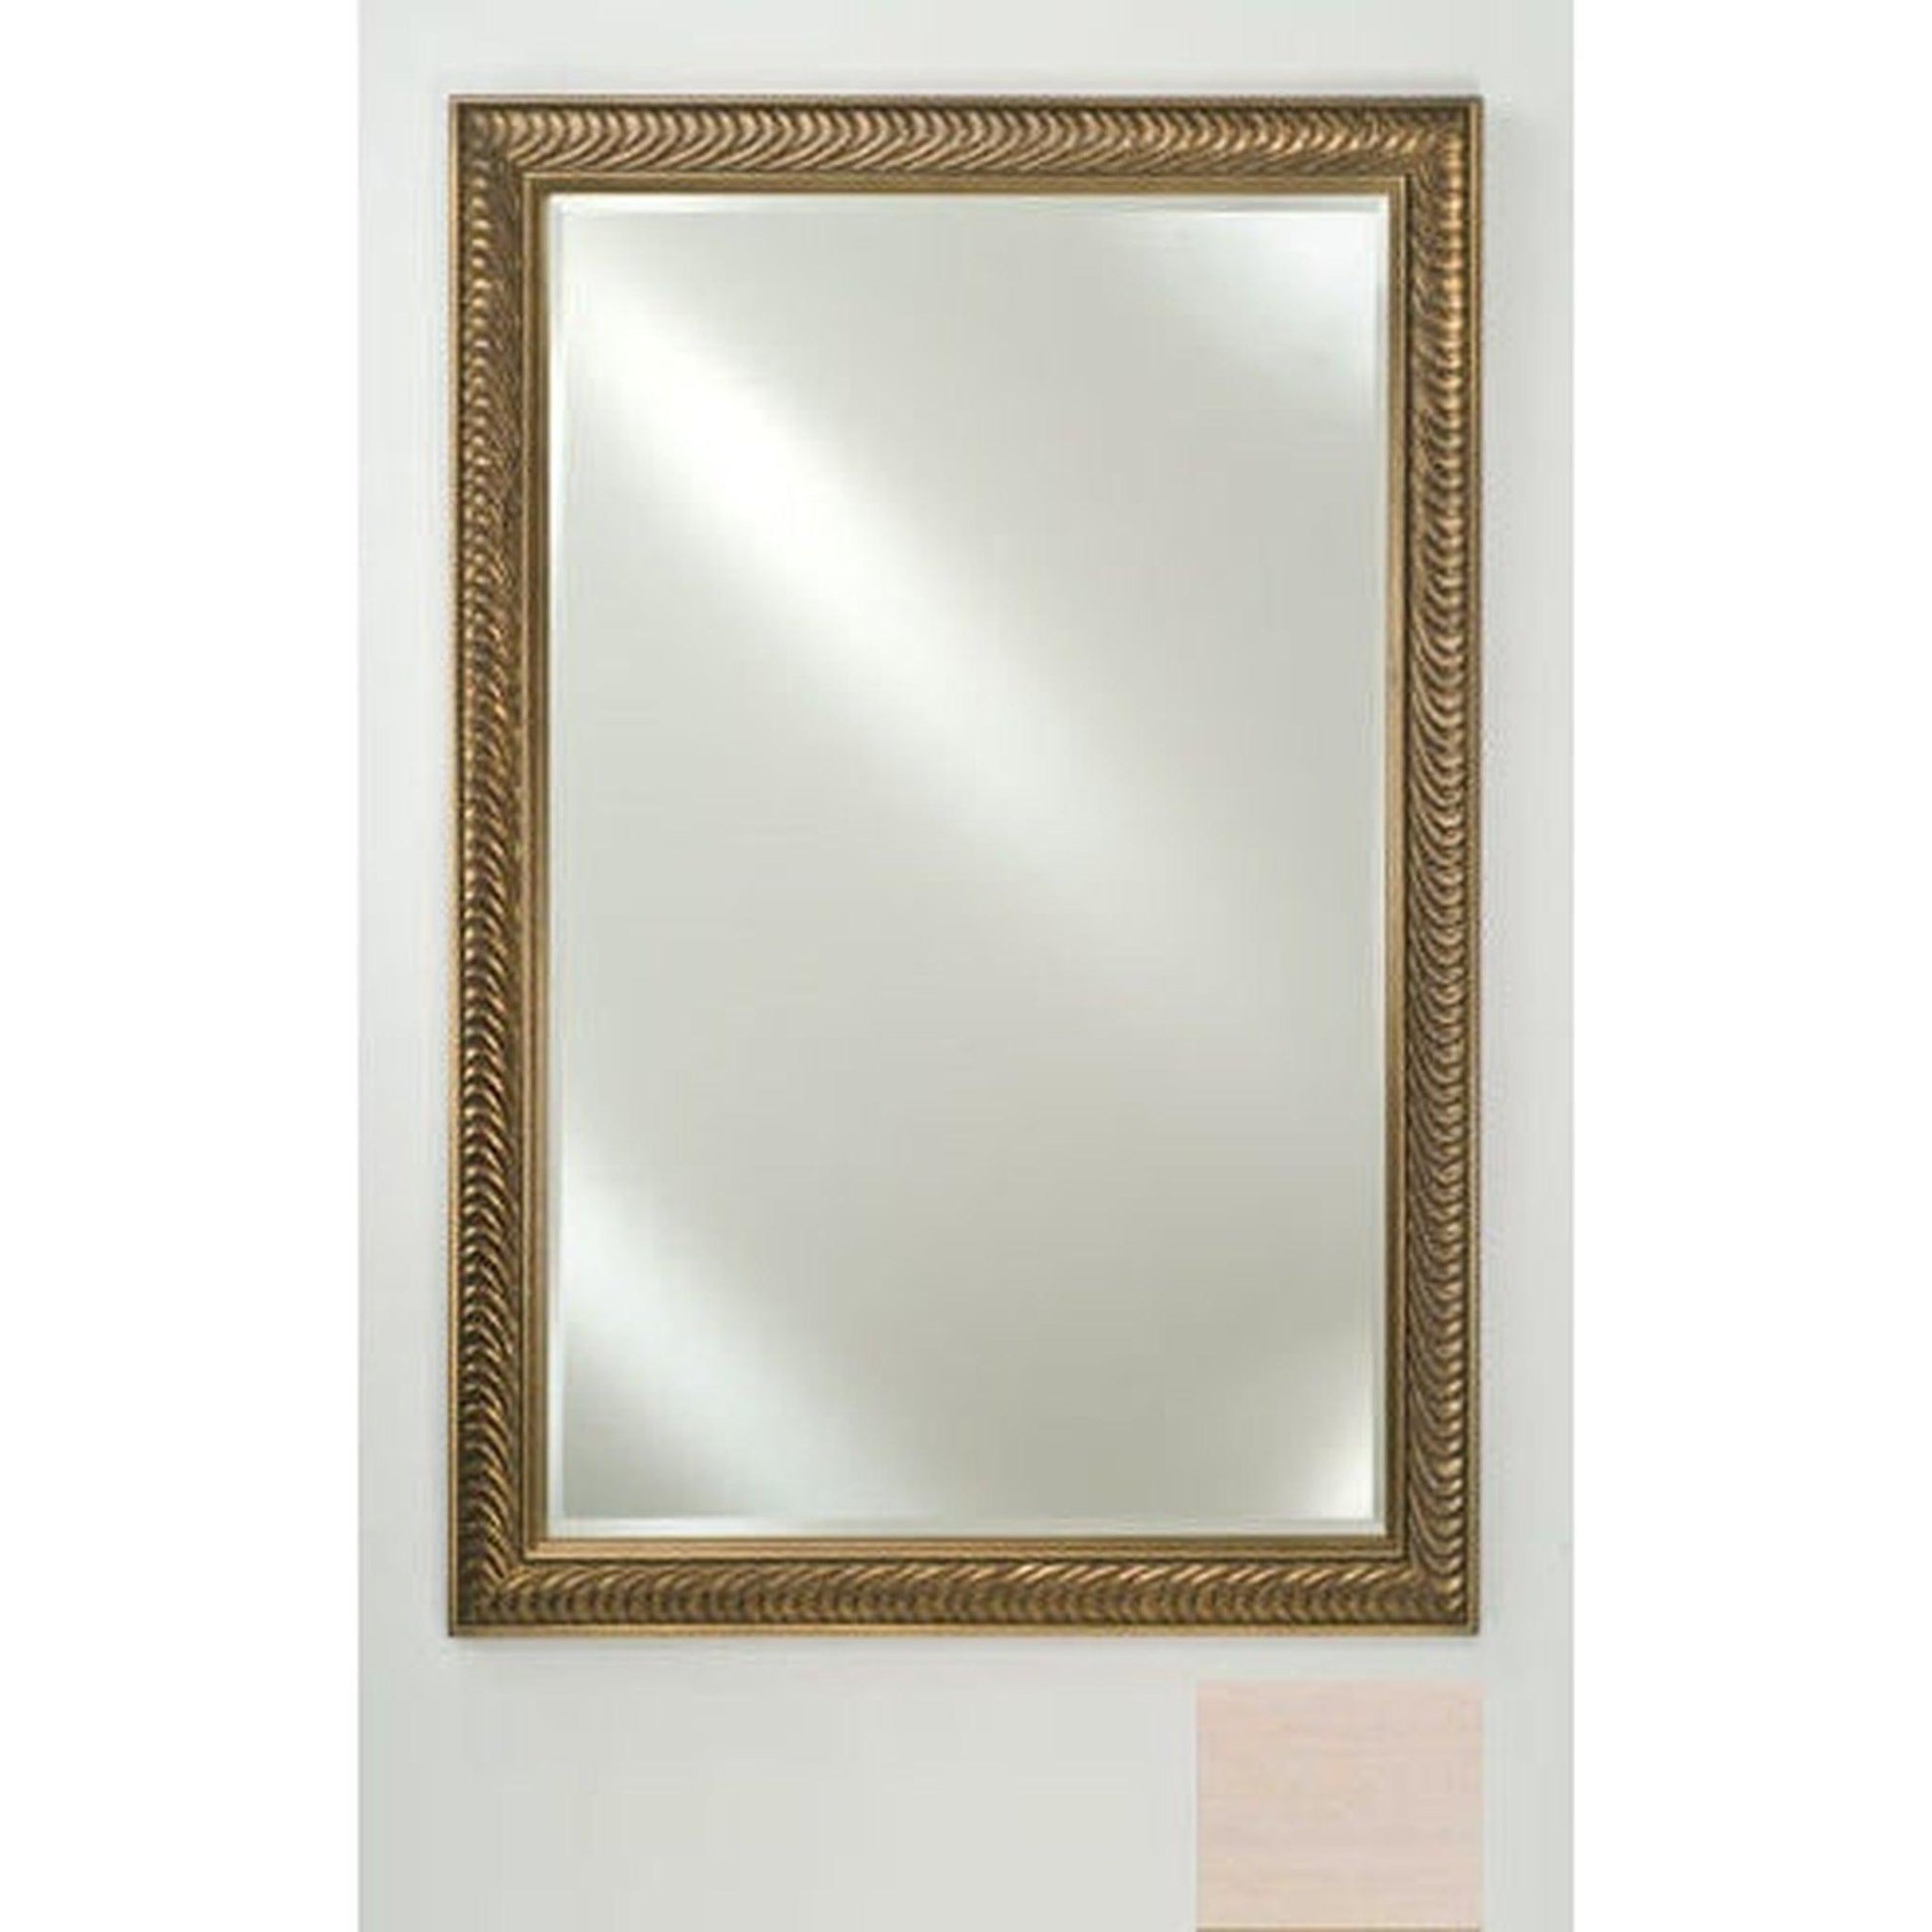 Afina Signature 20" x 26" Arlington Pickled Framed Mirror With Beveled Edge